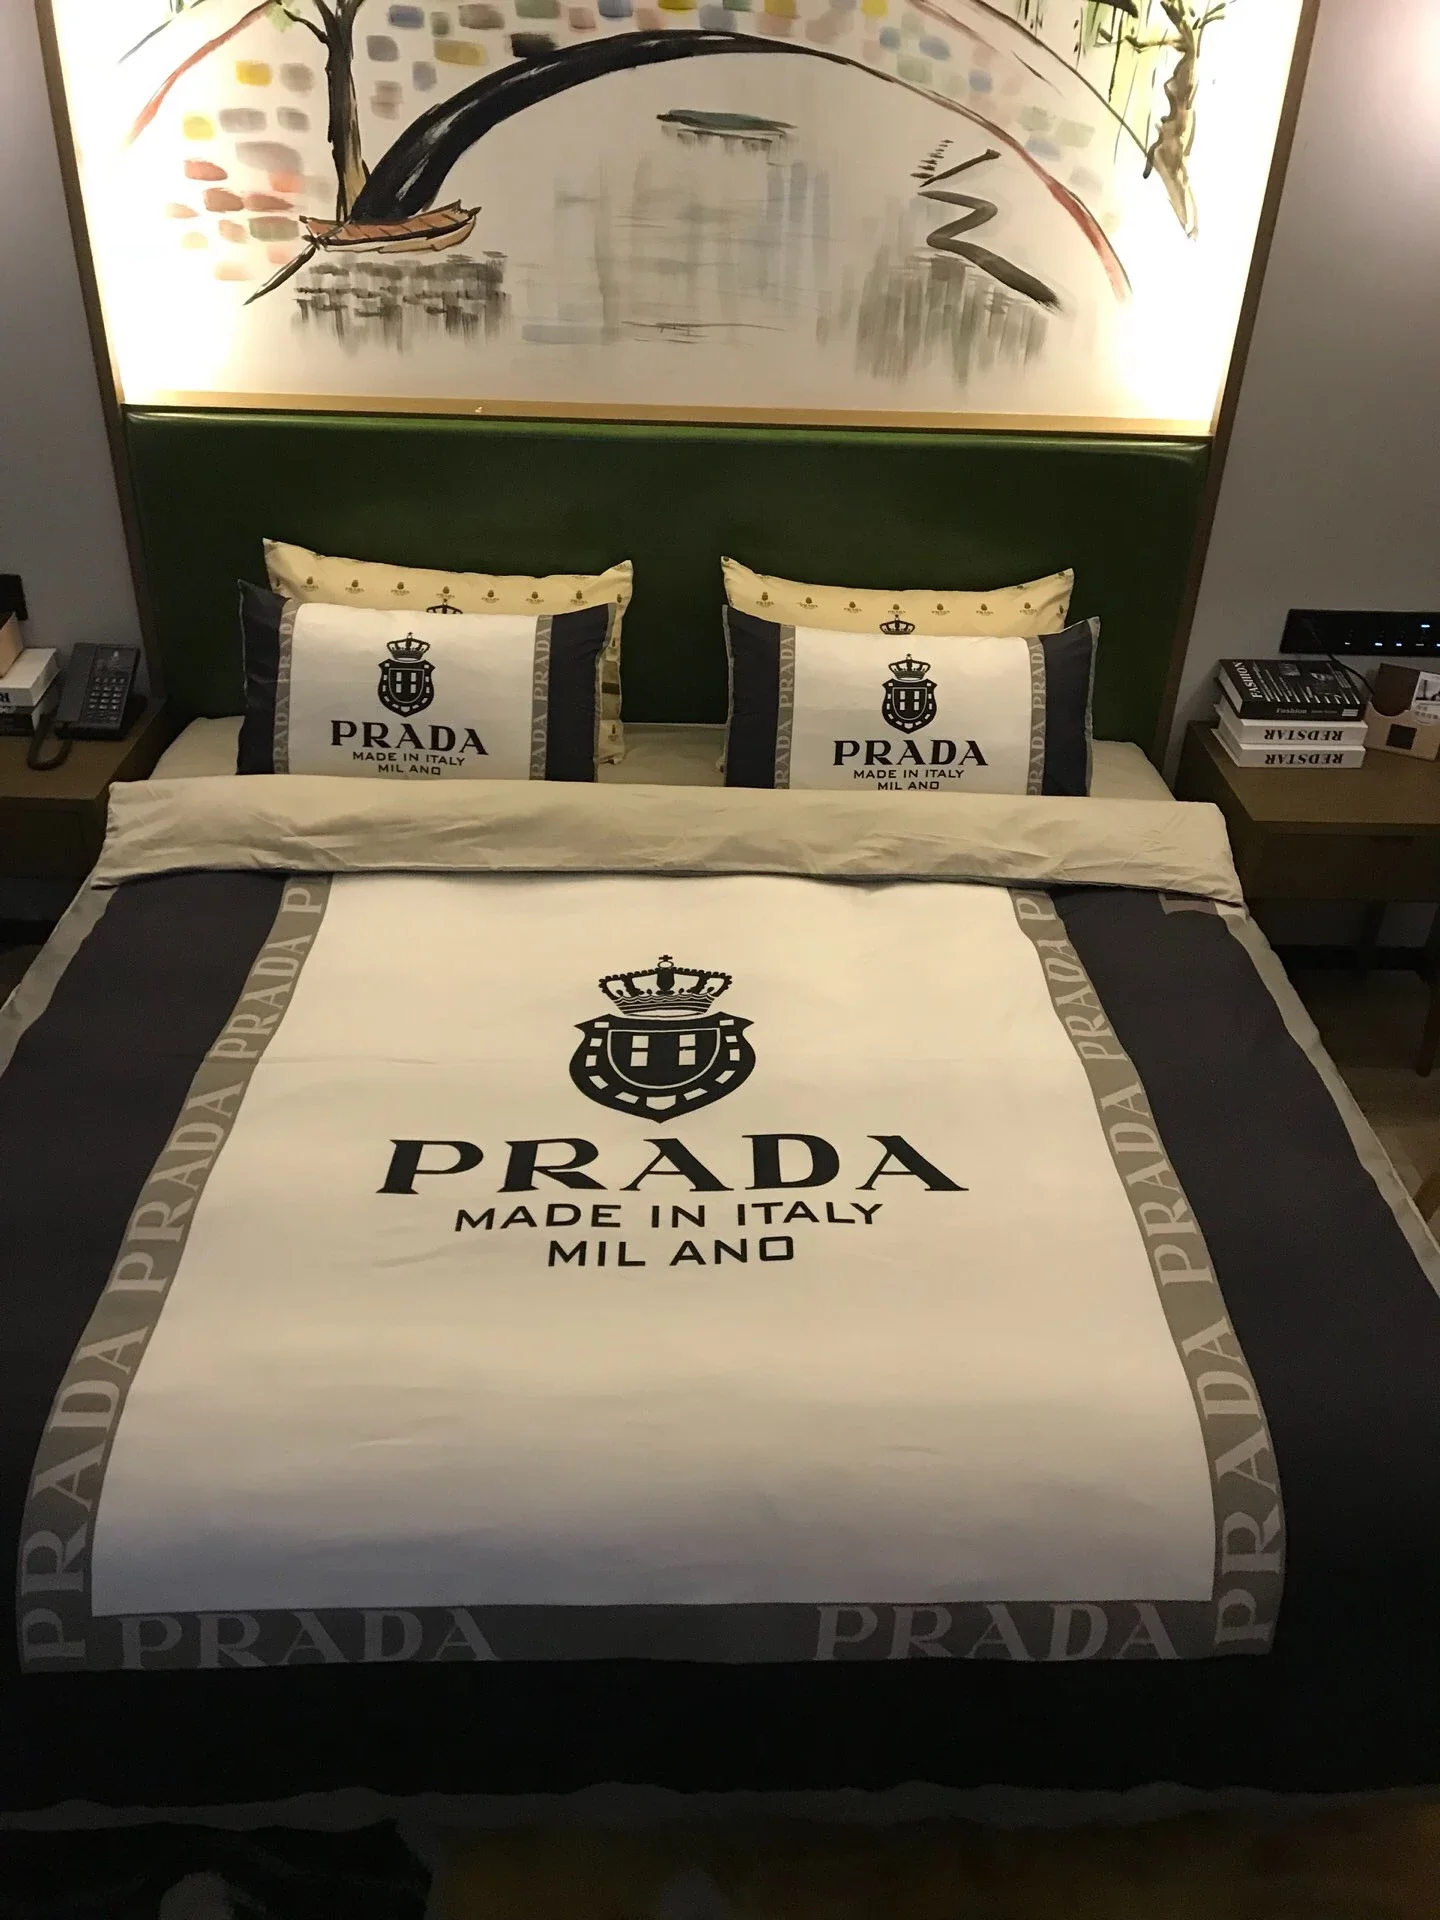 prada bed sheets Off 78% 